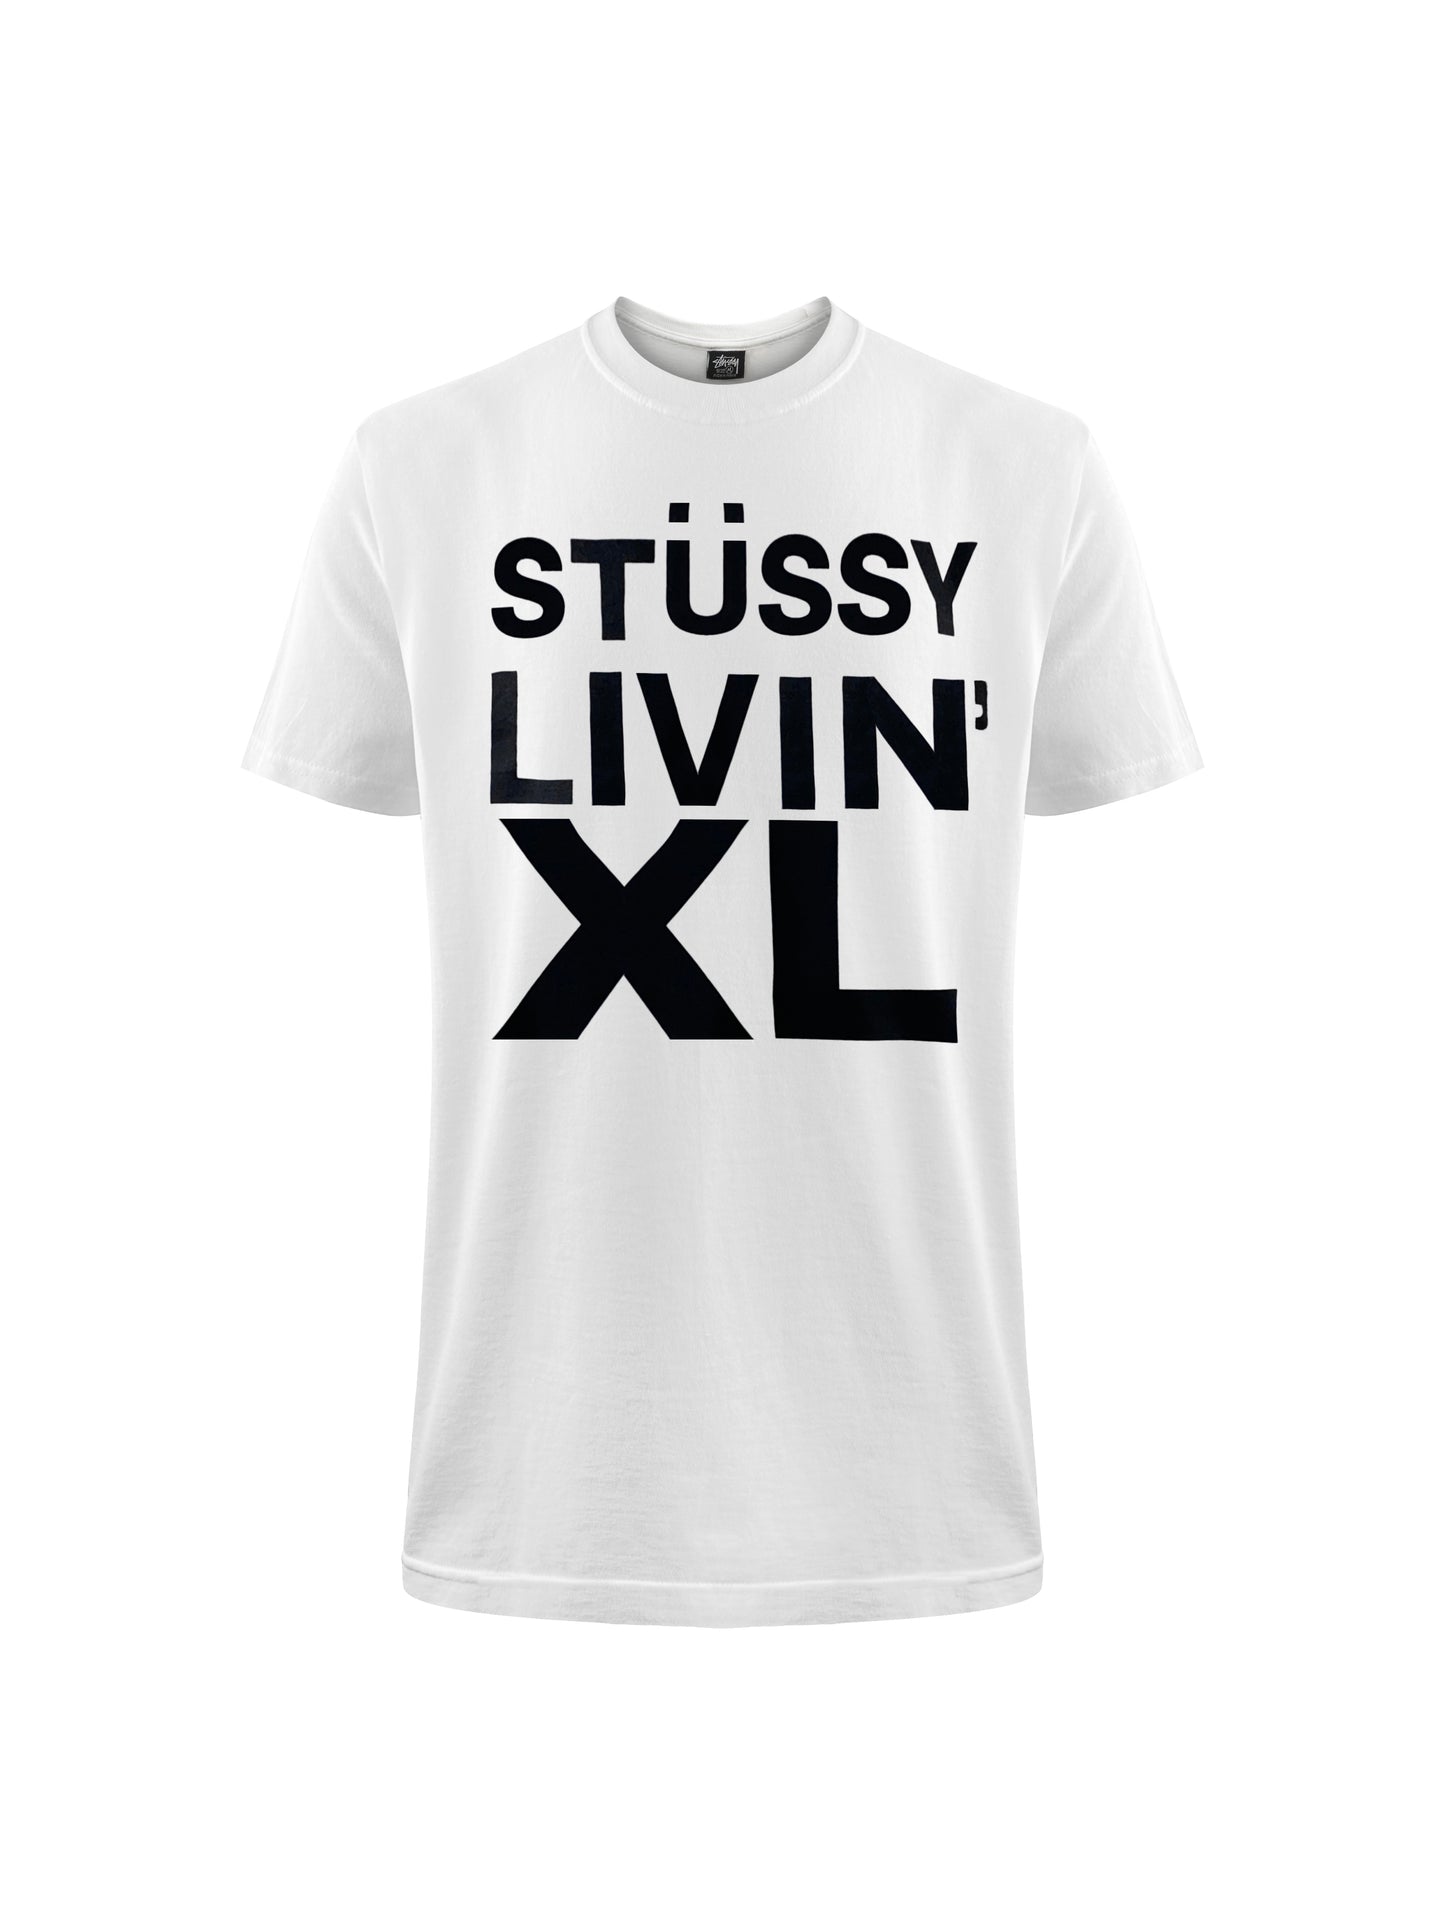 Stüssy T-Shirt “Livin‘ XL“ - White